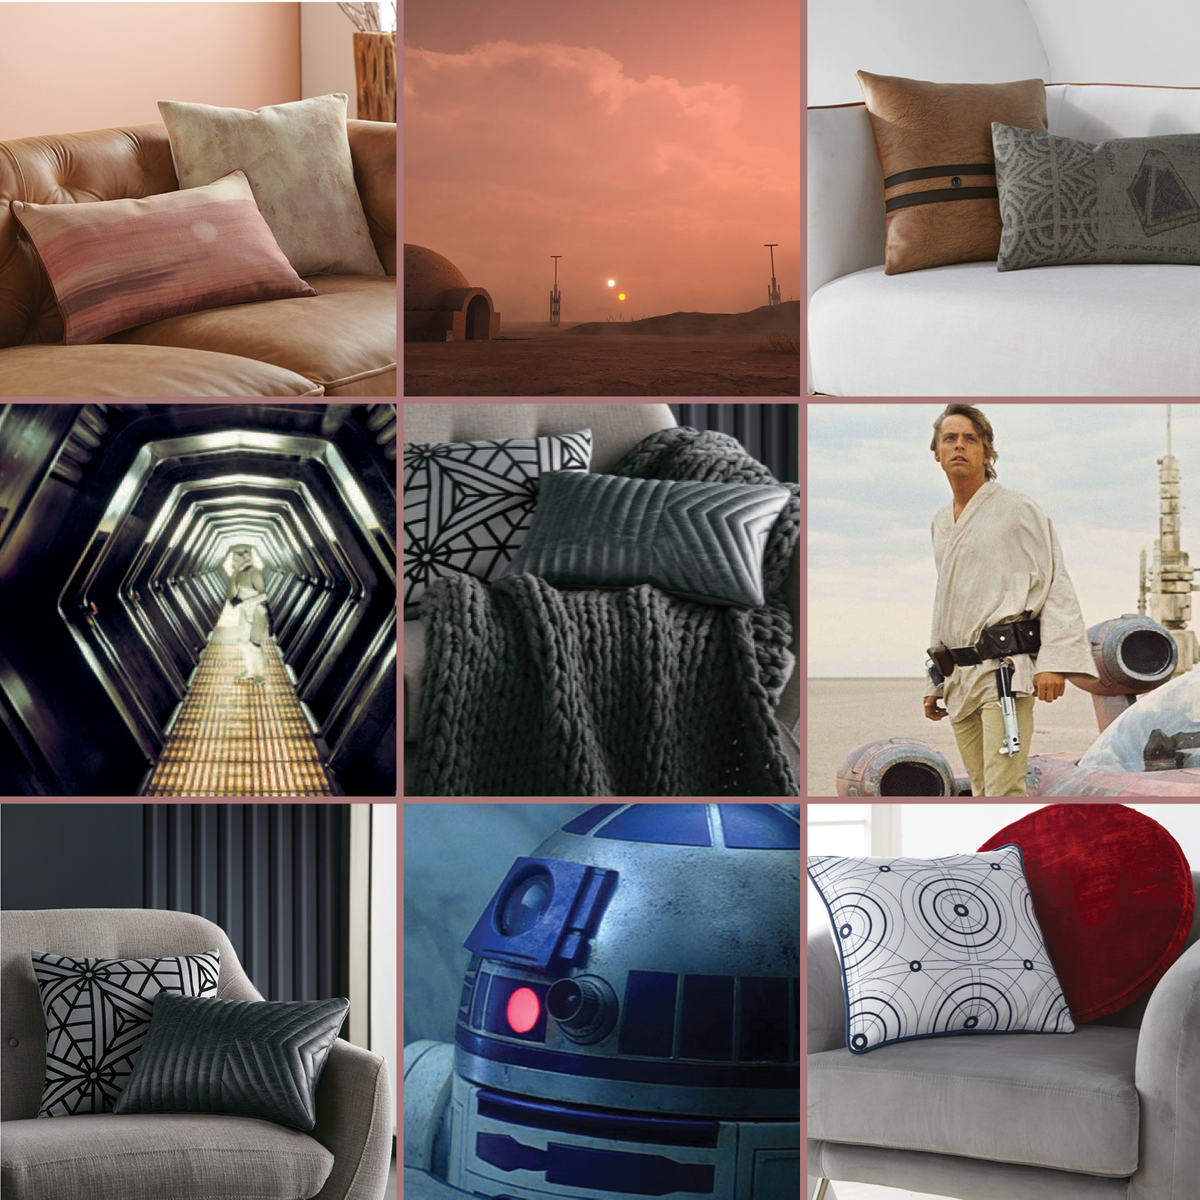 Sobel Westex Dark Side Star Wars 7pc Bedding Collection - Hotel Quality, Darth Vader Inspired Design, Twin